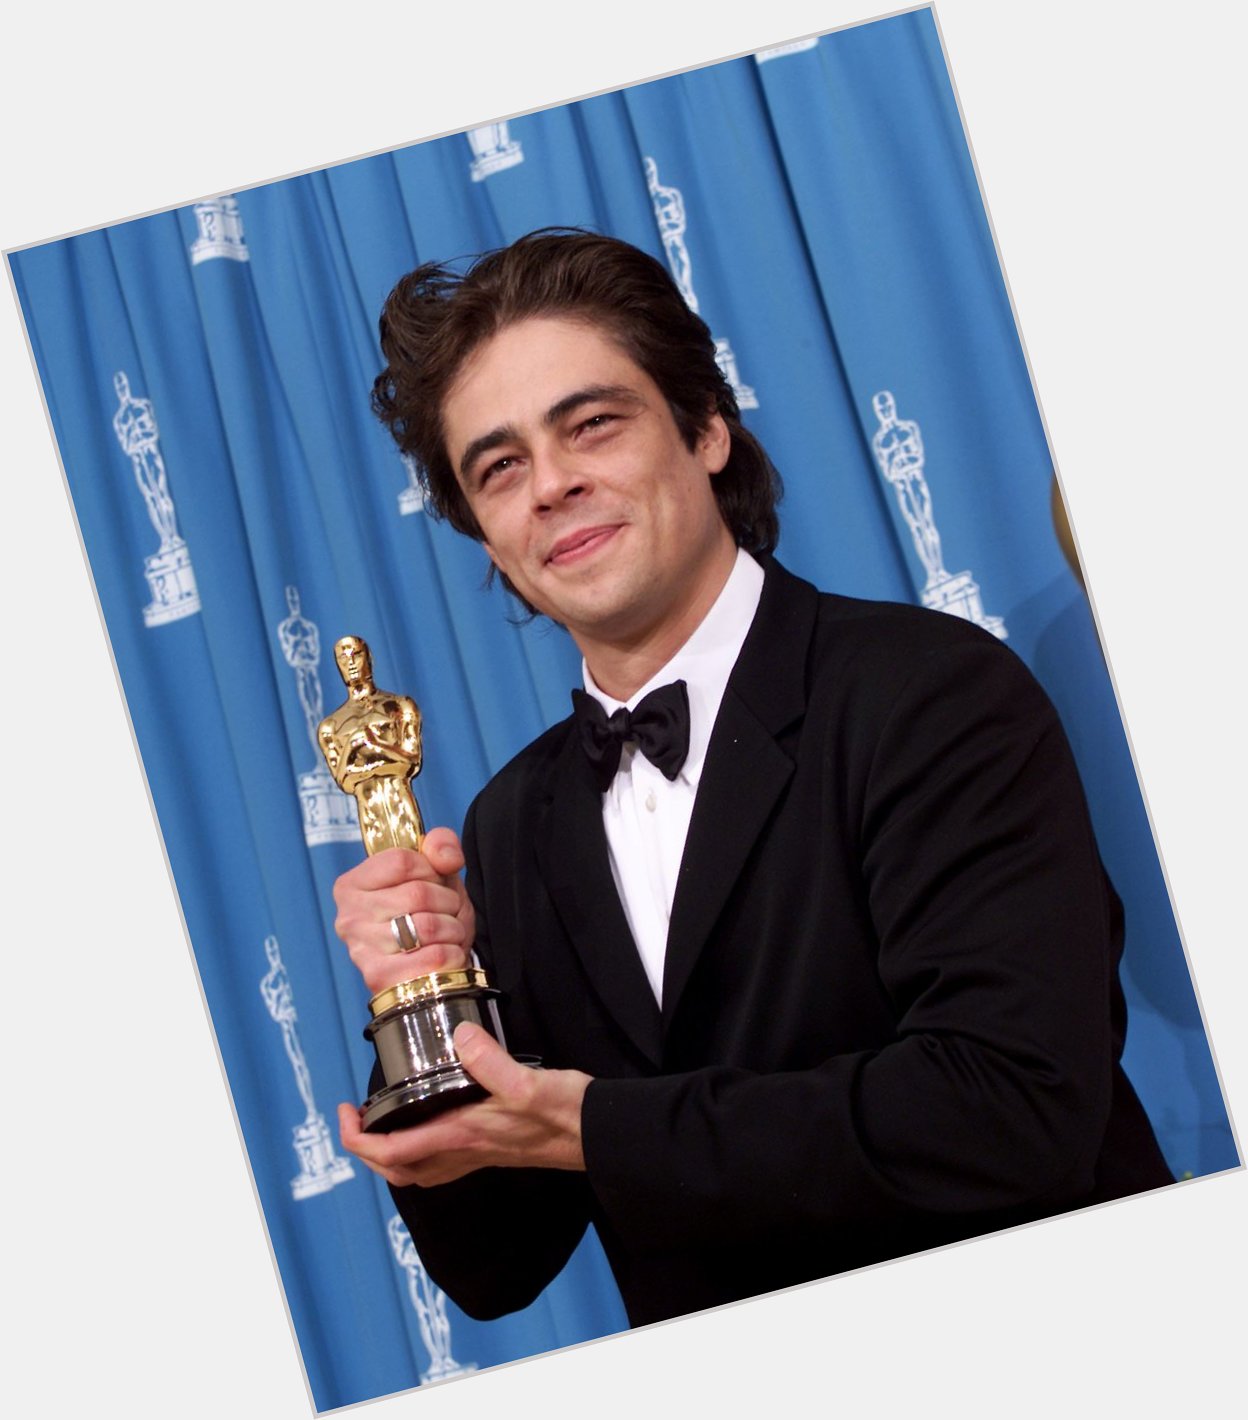 Happy birthday to Oscar winner Benicio del Toro! 